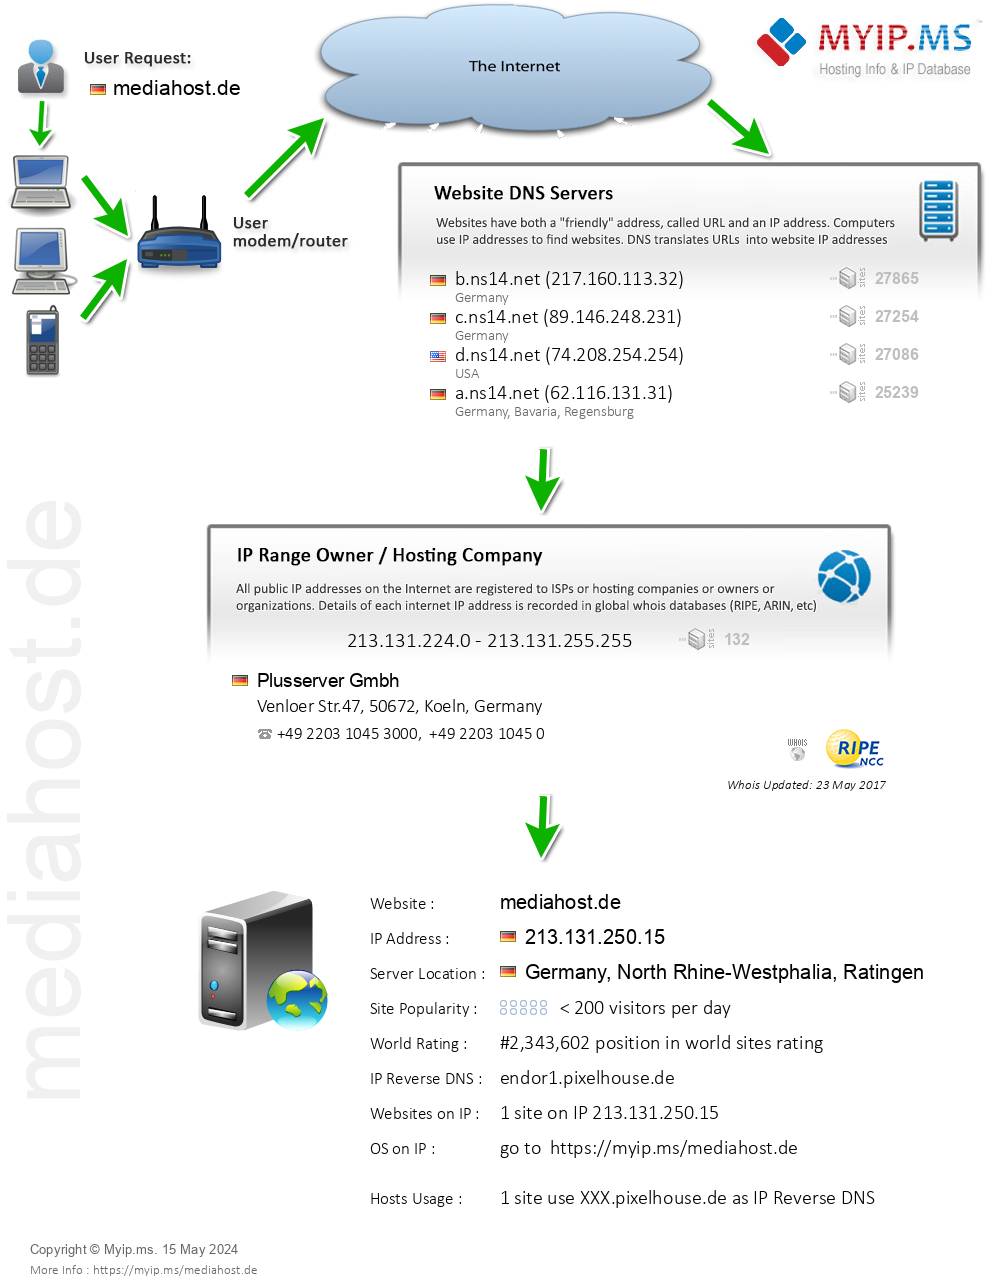 Mediahost.de - Website Hosting Visual IP Diagram